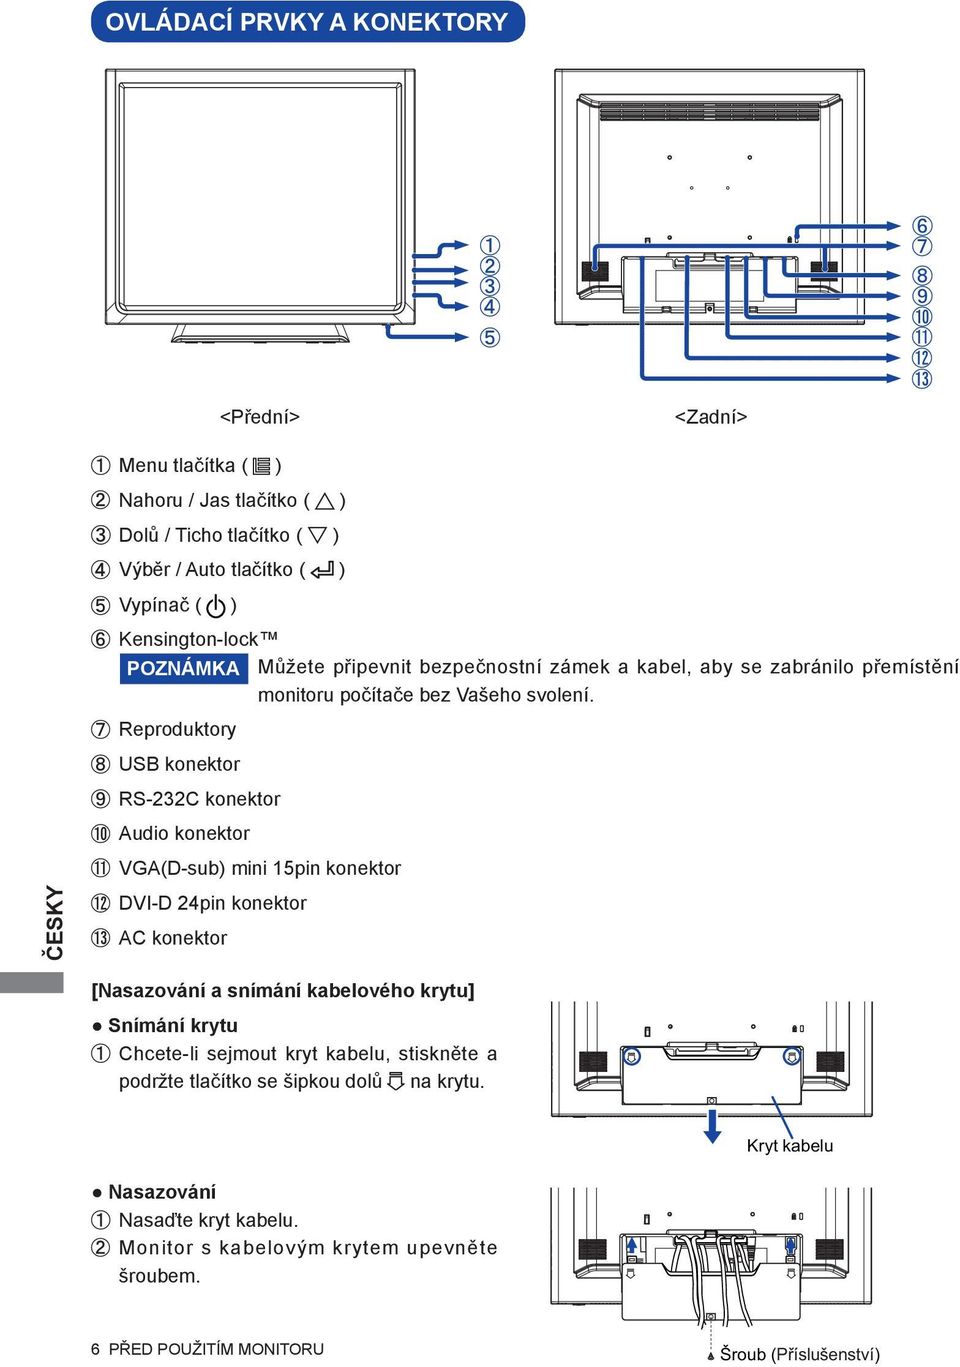 Reproduktory USB konektor RS-232C konektor Audio konektor VGA(D-sub) mini 15pin konektor DVI-D 24pin konektor AC konektor [Nasazování a snímání kabelového krytu]